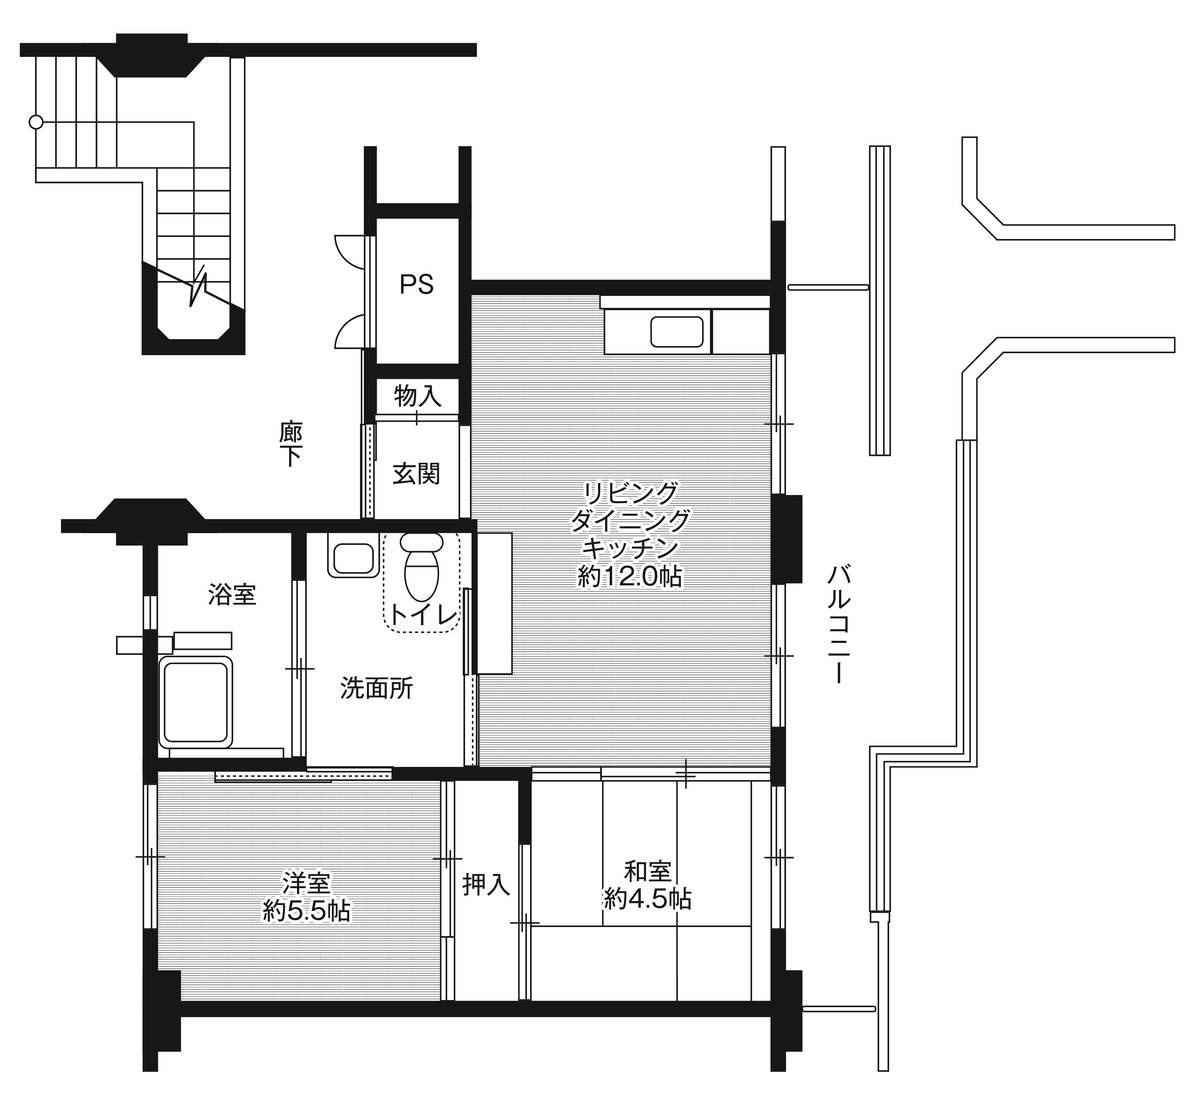 2LDK floorplan of Village House Yabara in Yamaguchi-shi